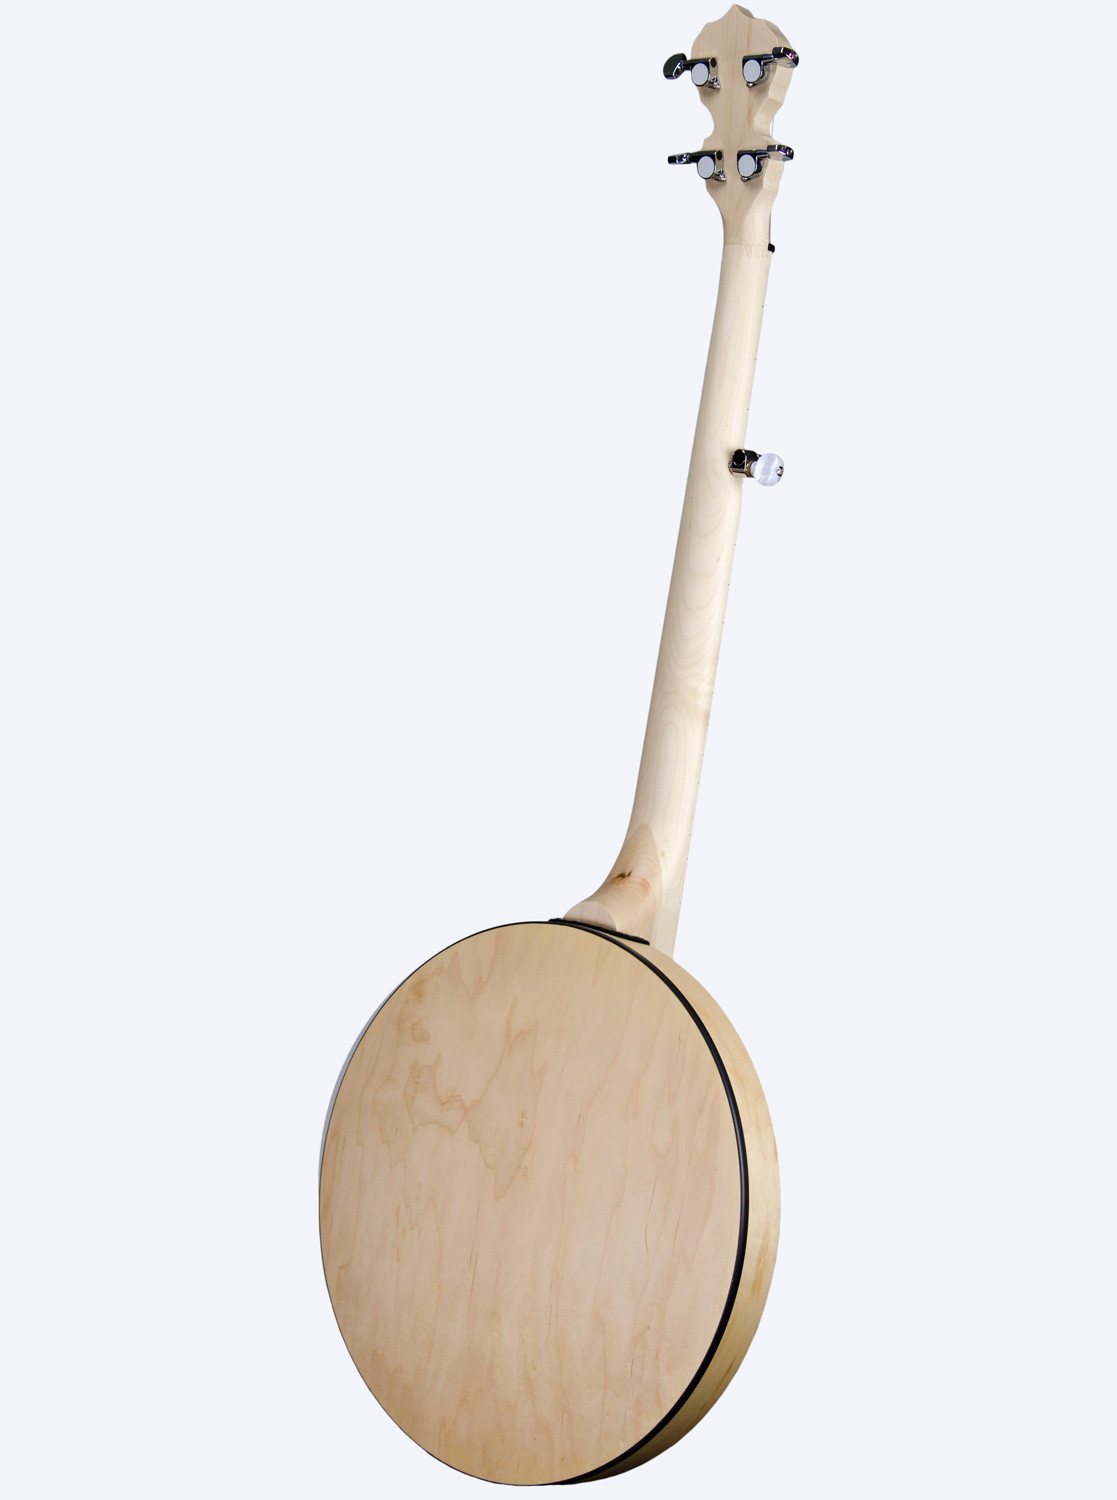 Deering Goodtime Two™ Banjo